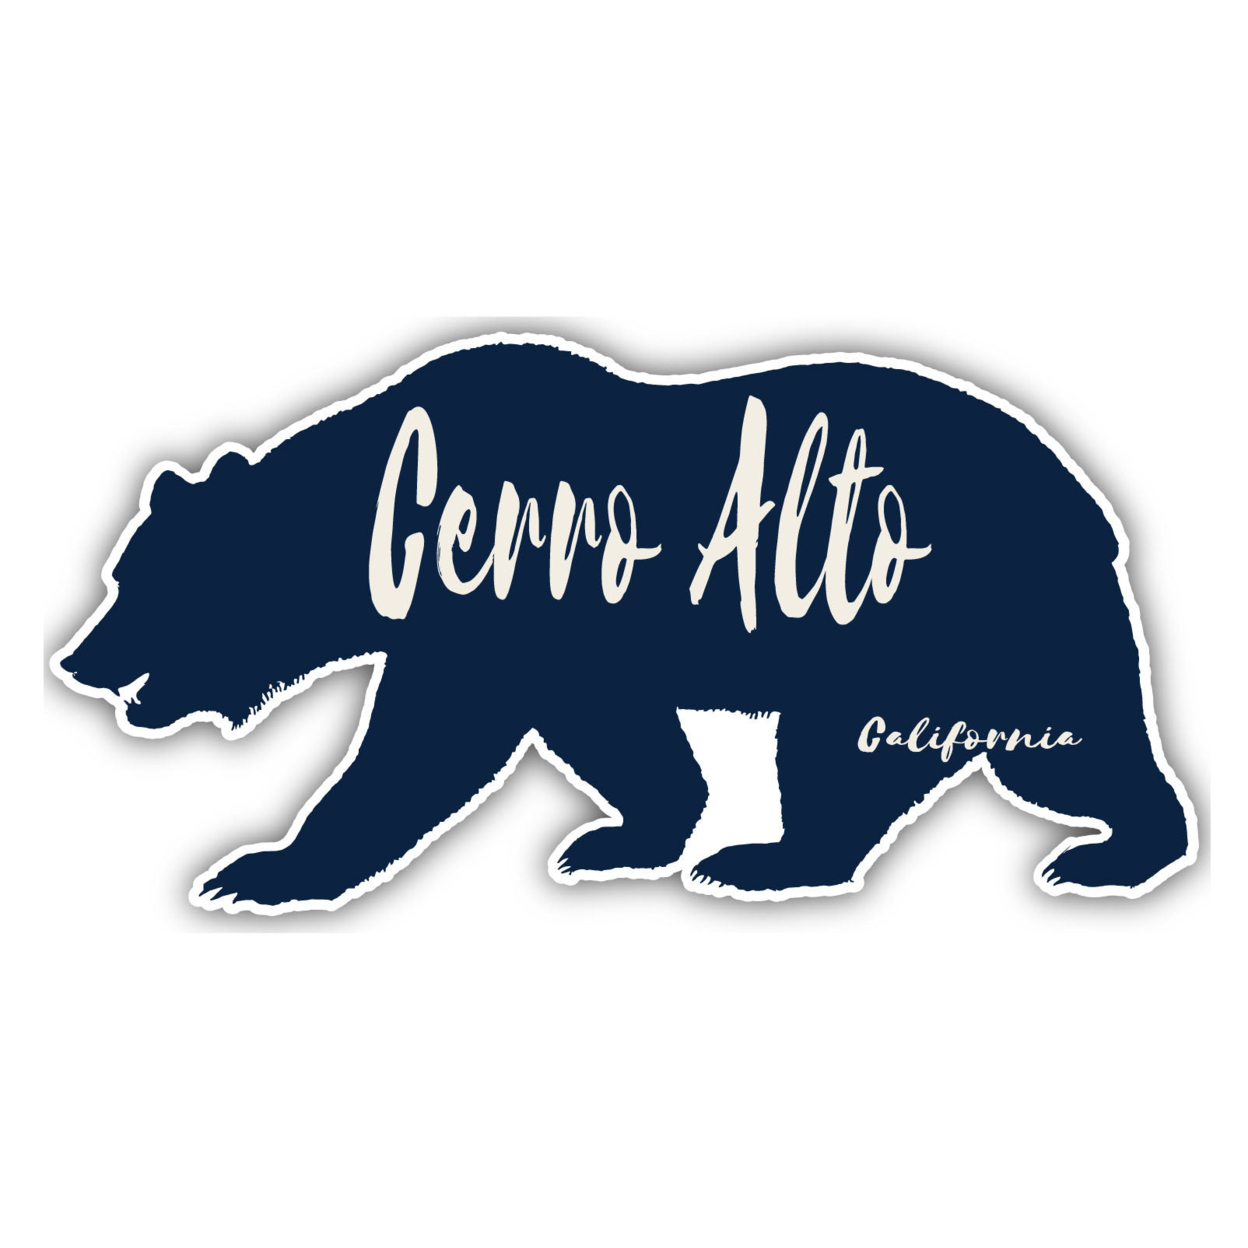 Cerro Alto California Souvenir Decorative Stickers (Choose Theme And Size) - 4-Pack, 2-Inch, Bear